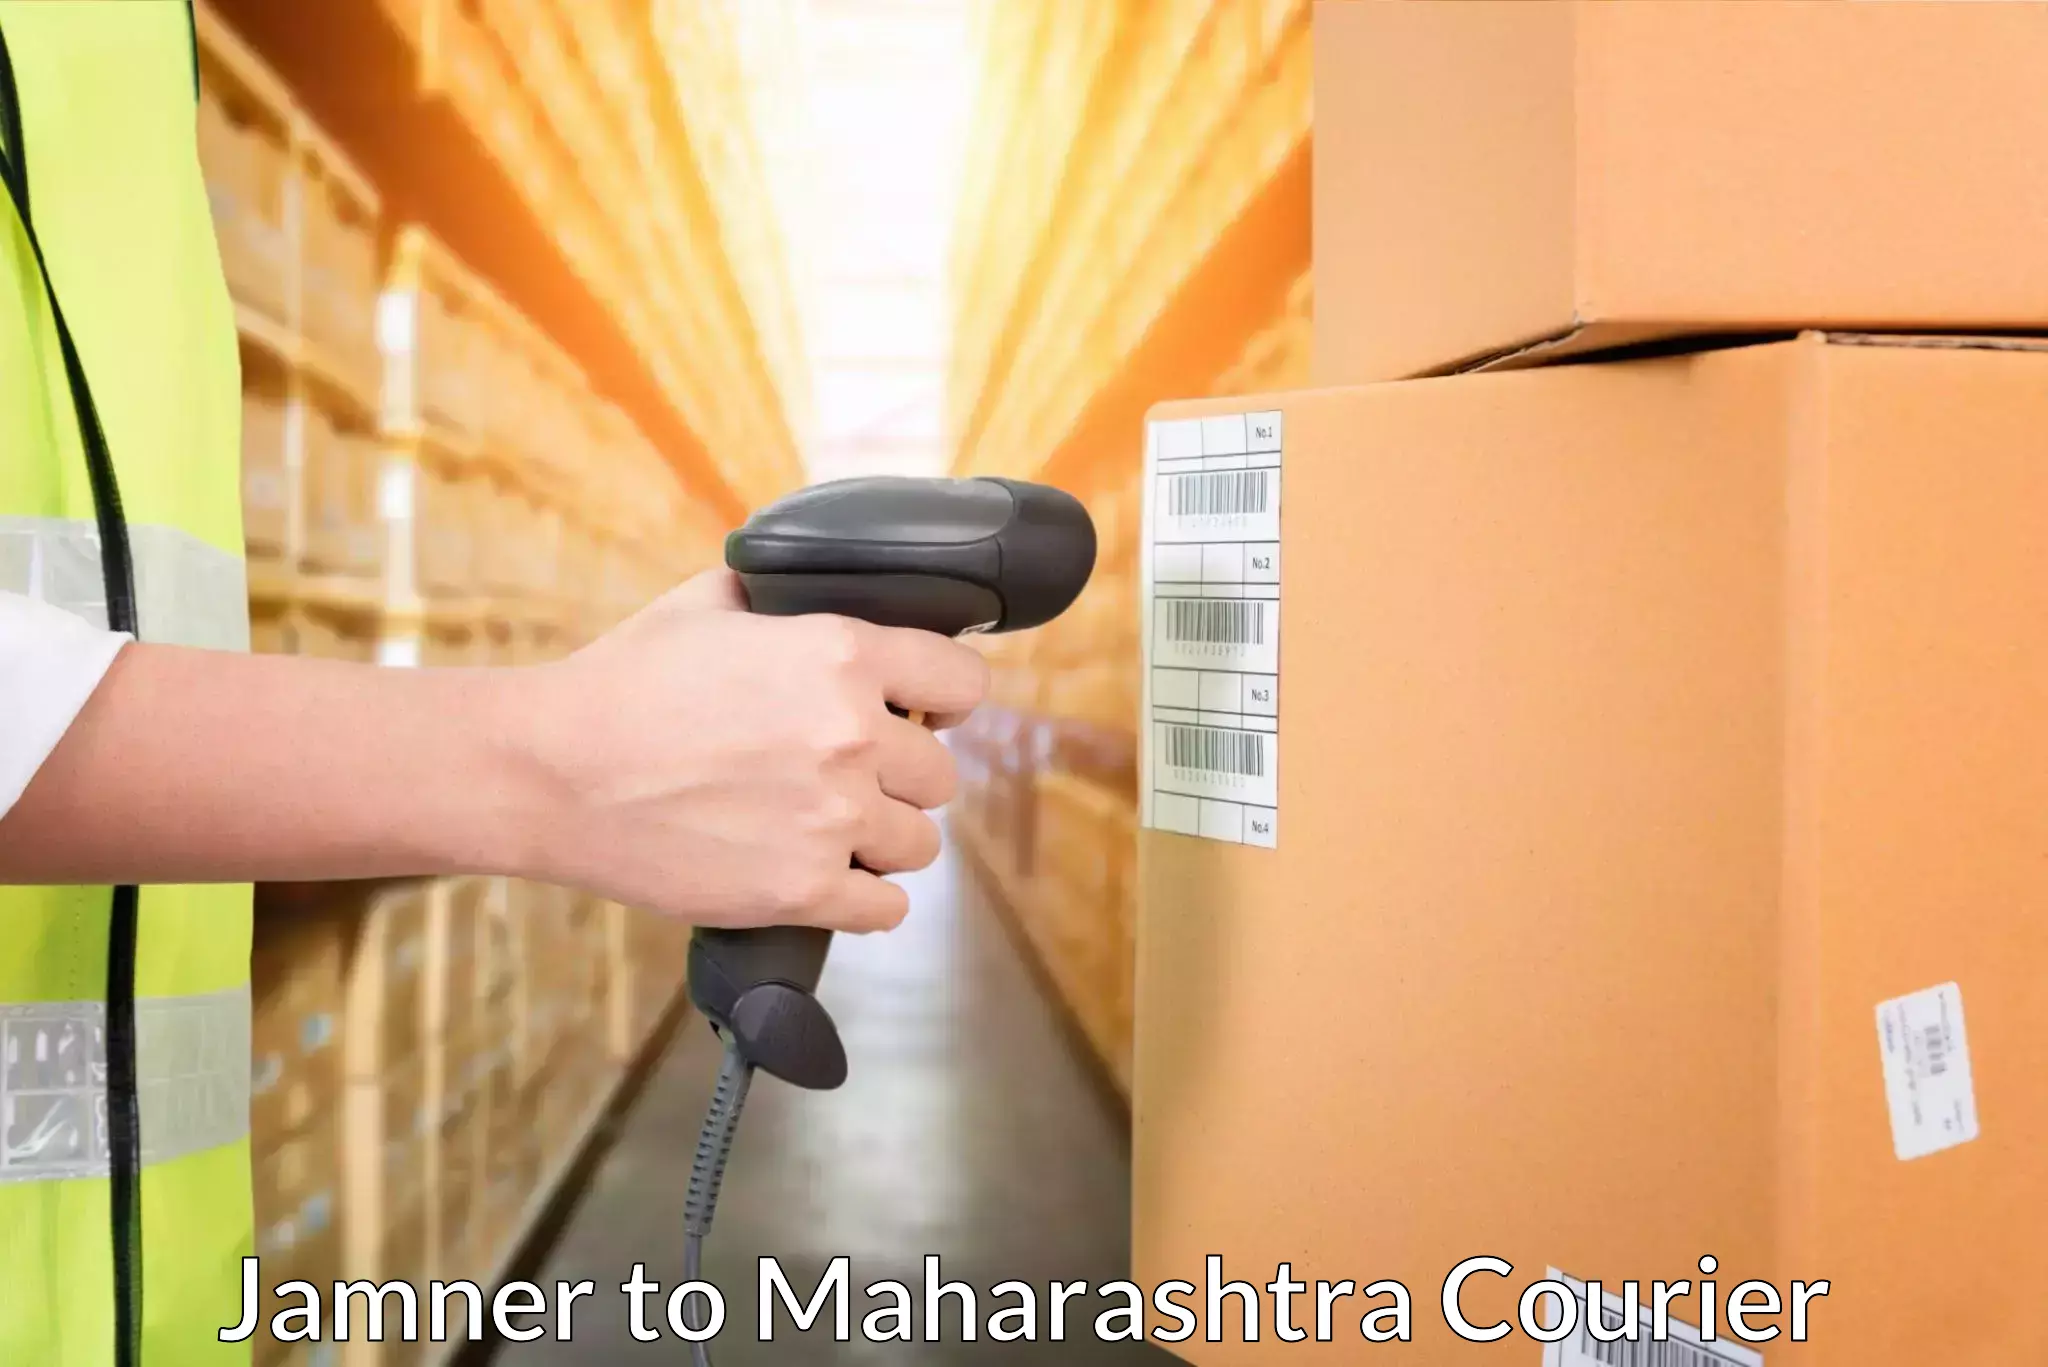 Courier service partnerships Jamner to Andheri